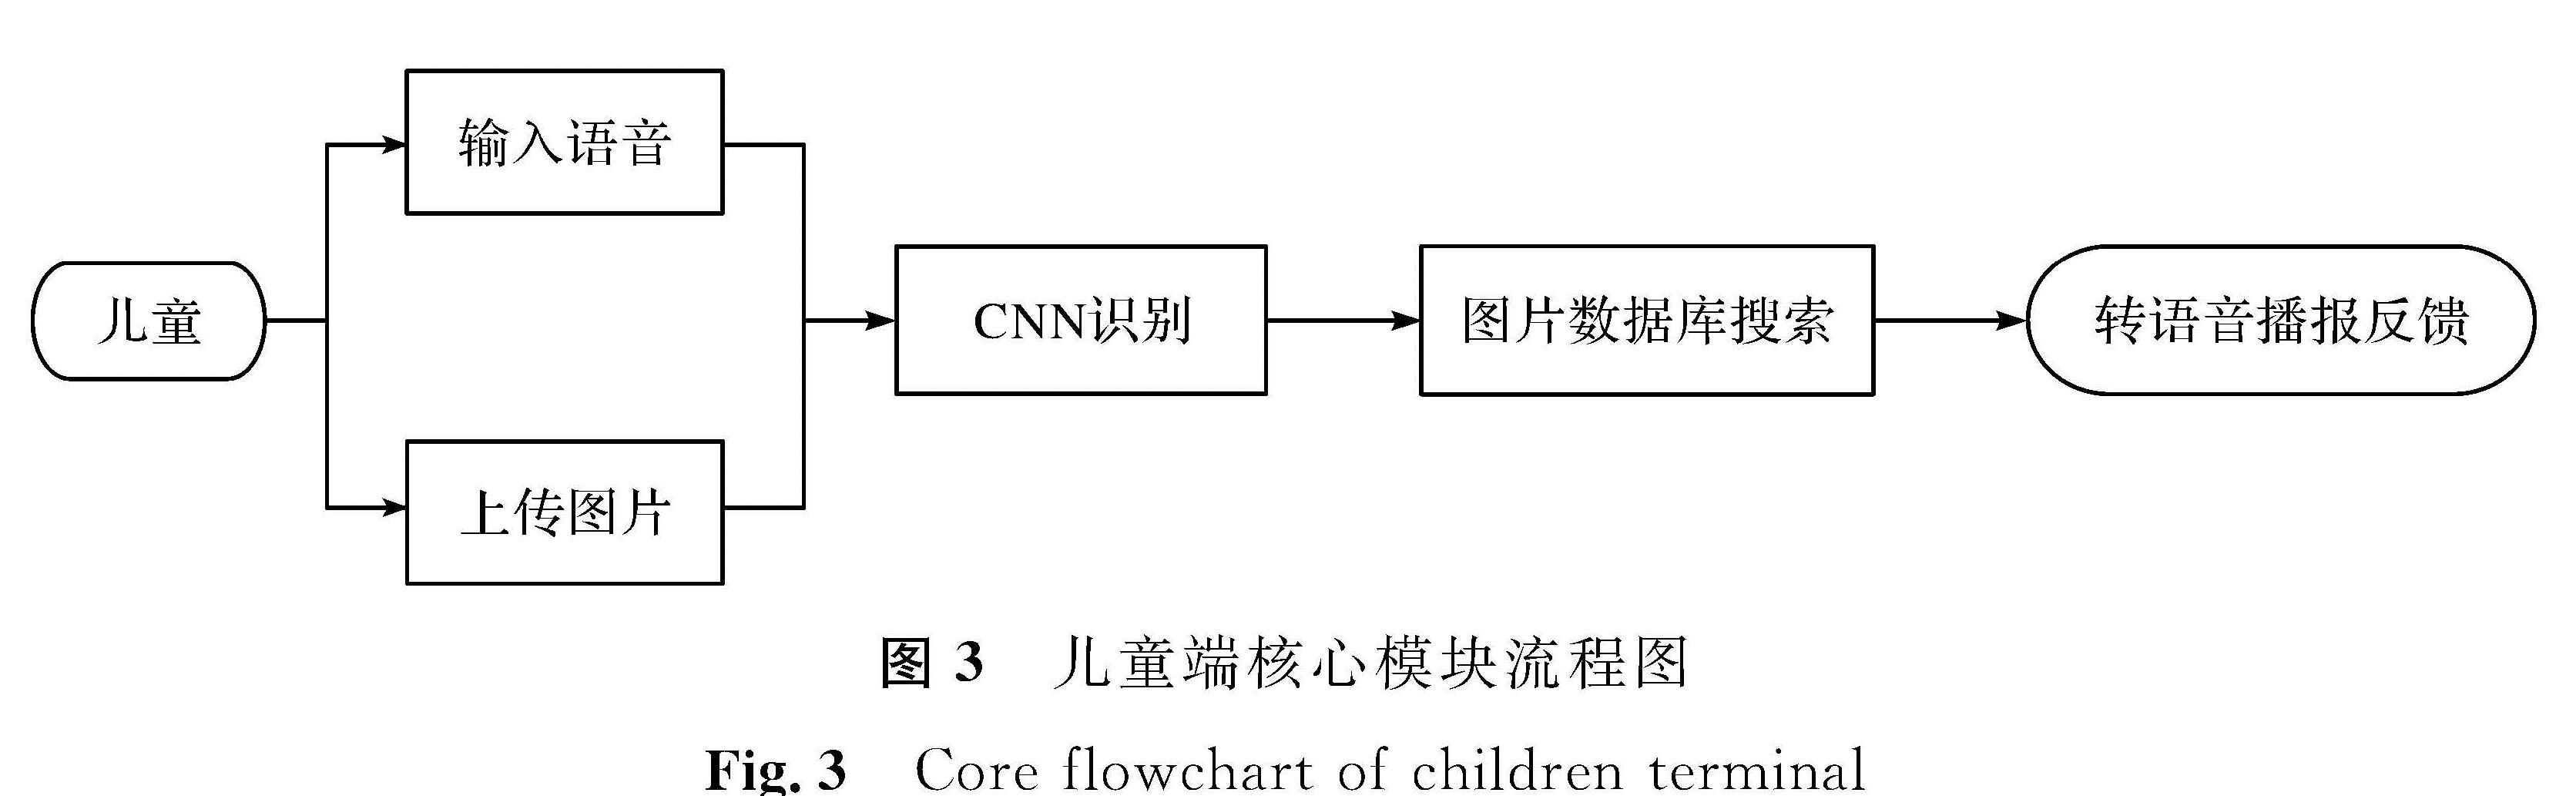 图3 儿童端核心模块流程图<br/>Fig.3 Core flowchart of children terminal